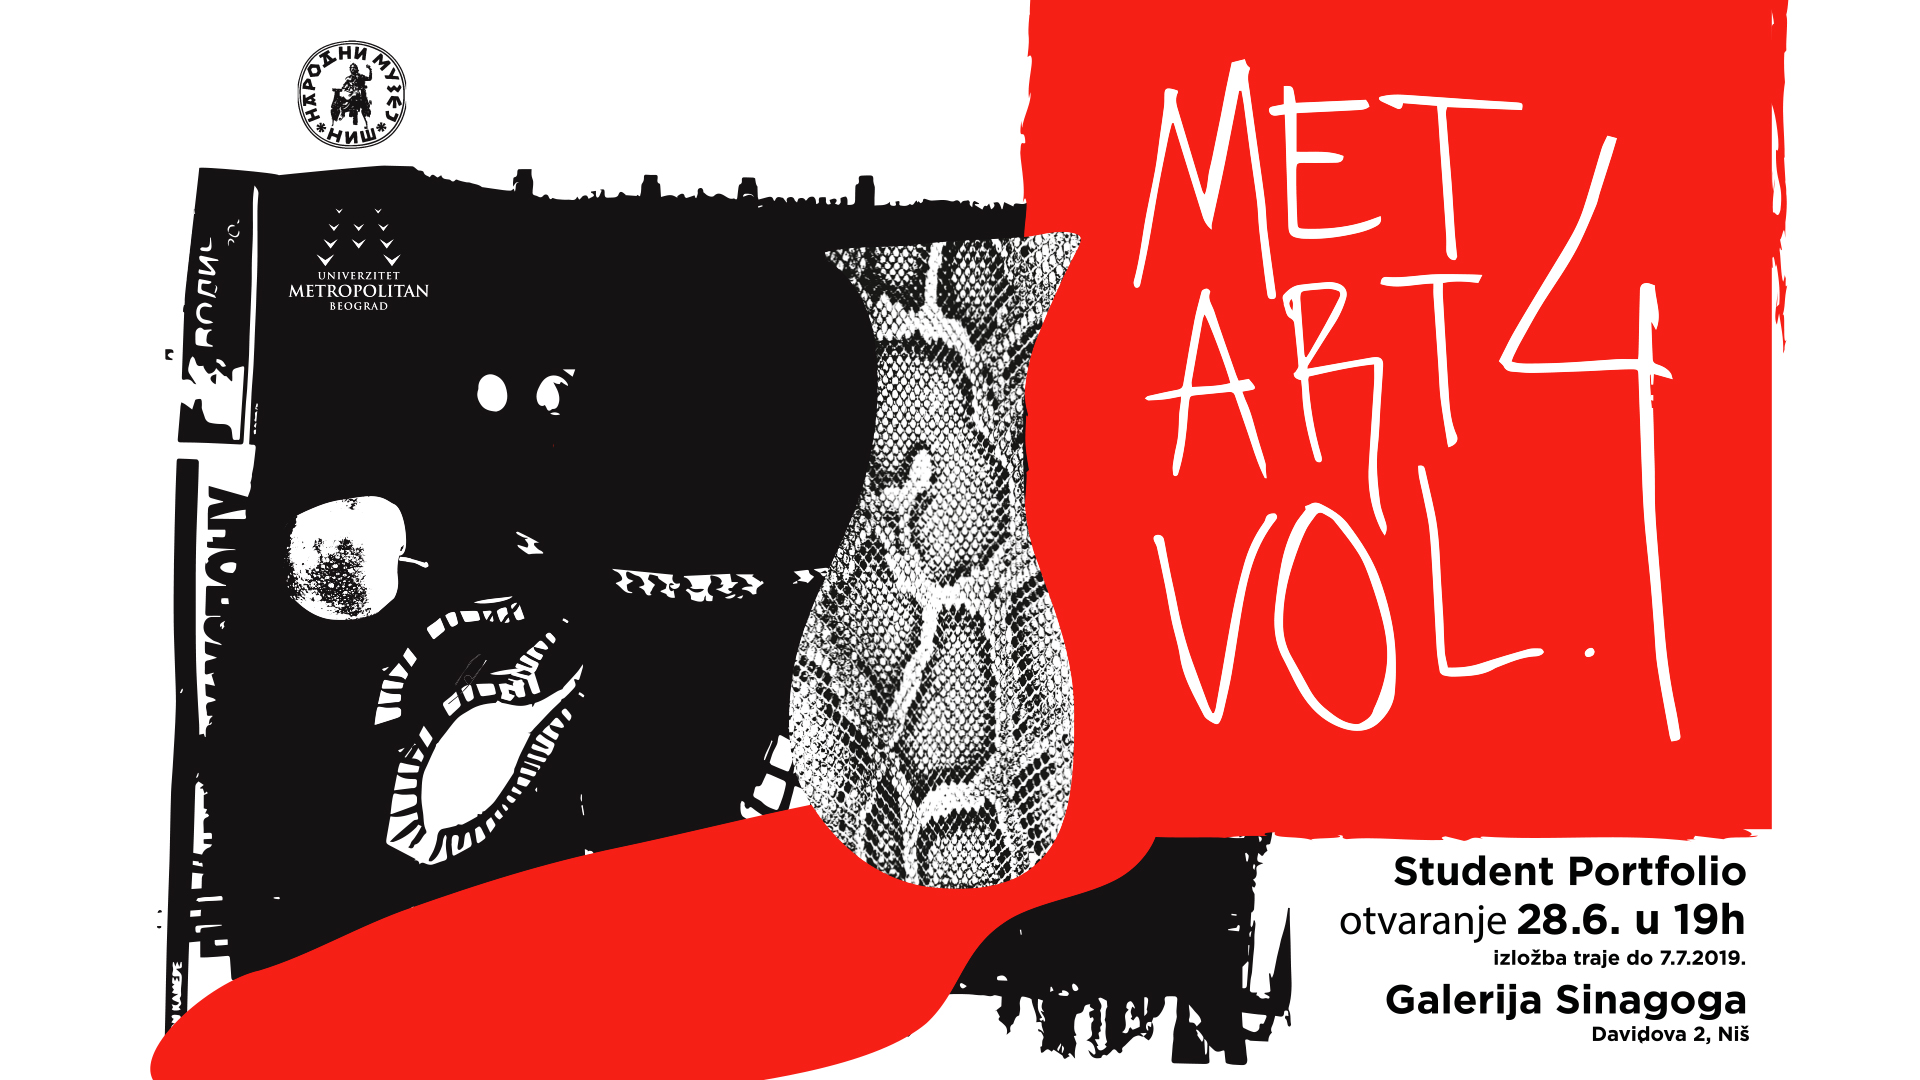 Met art vol. 4 – godišnja izložba radova studenata UM-a iz Niša